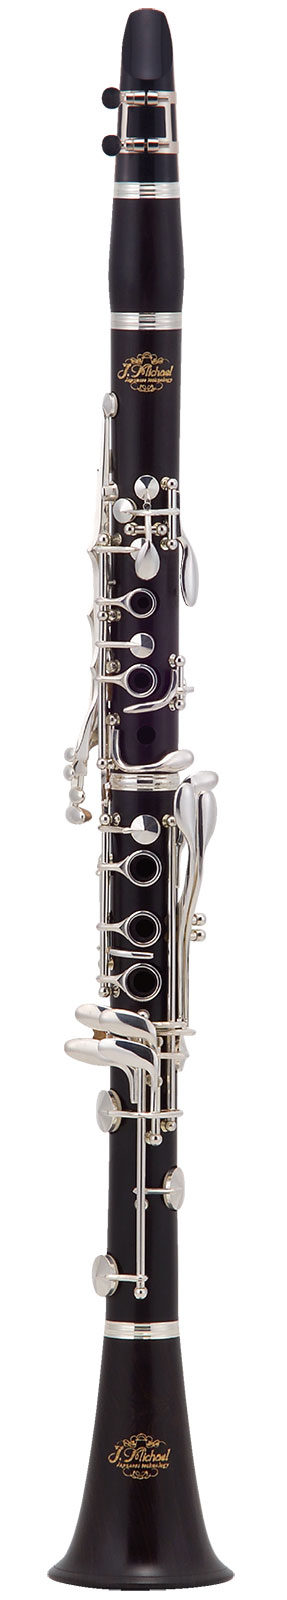 J.MICHAEL CL-750 Clarinet